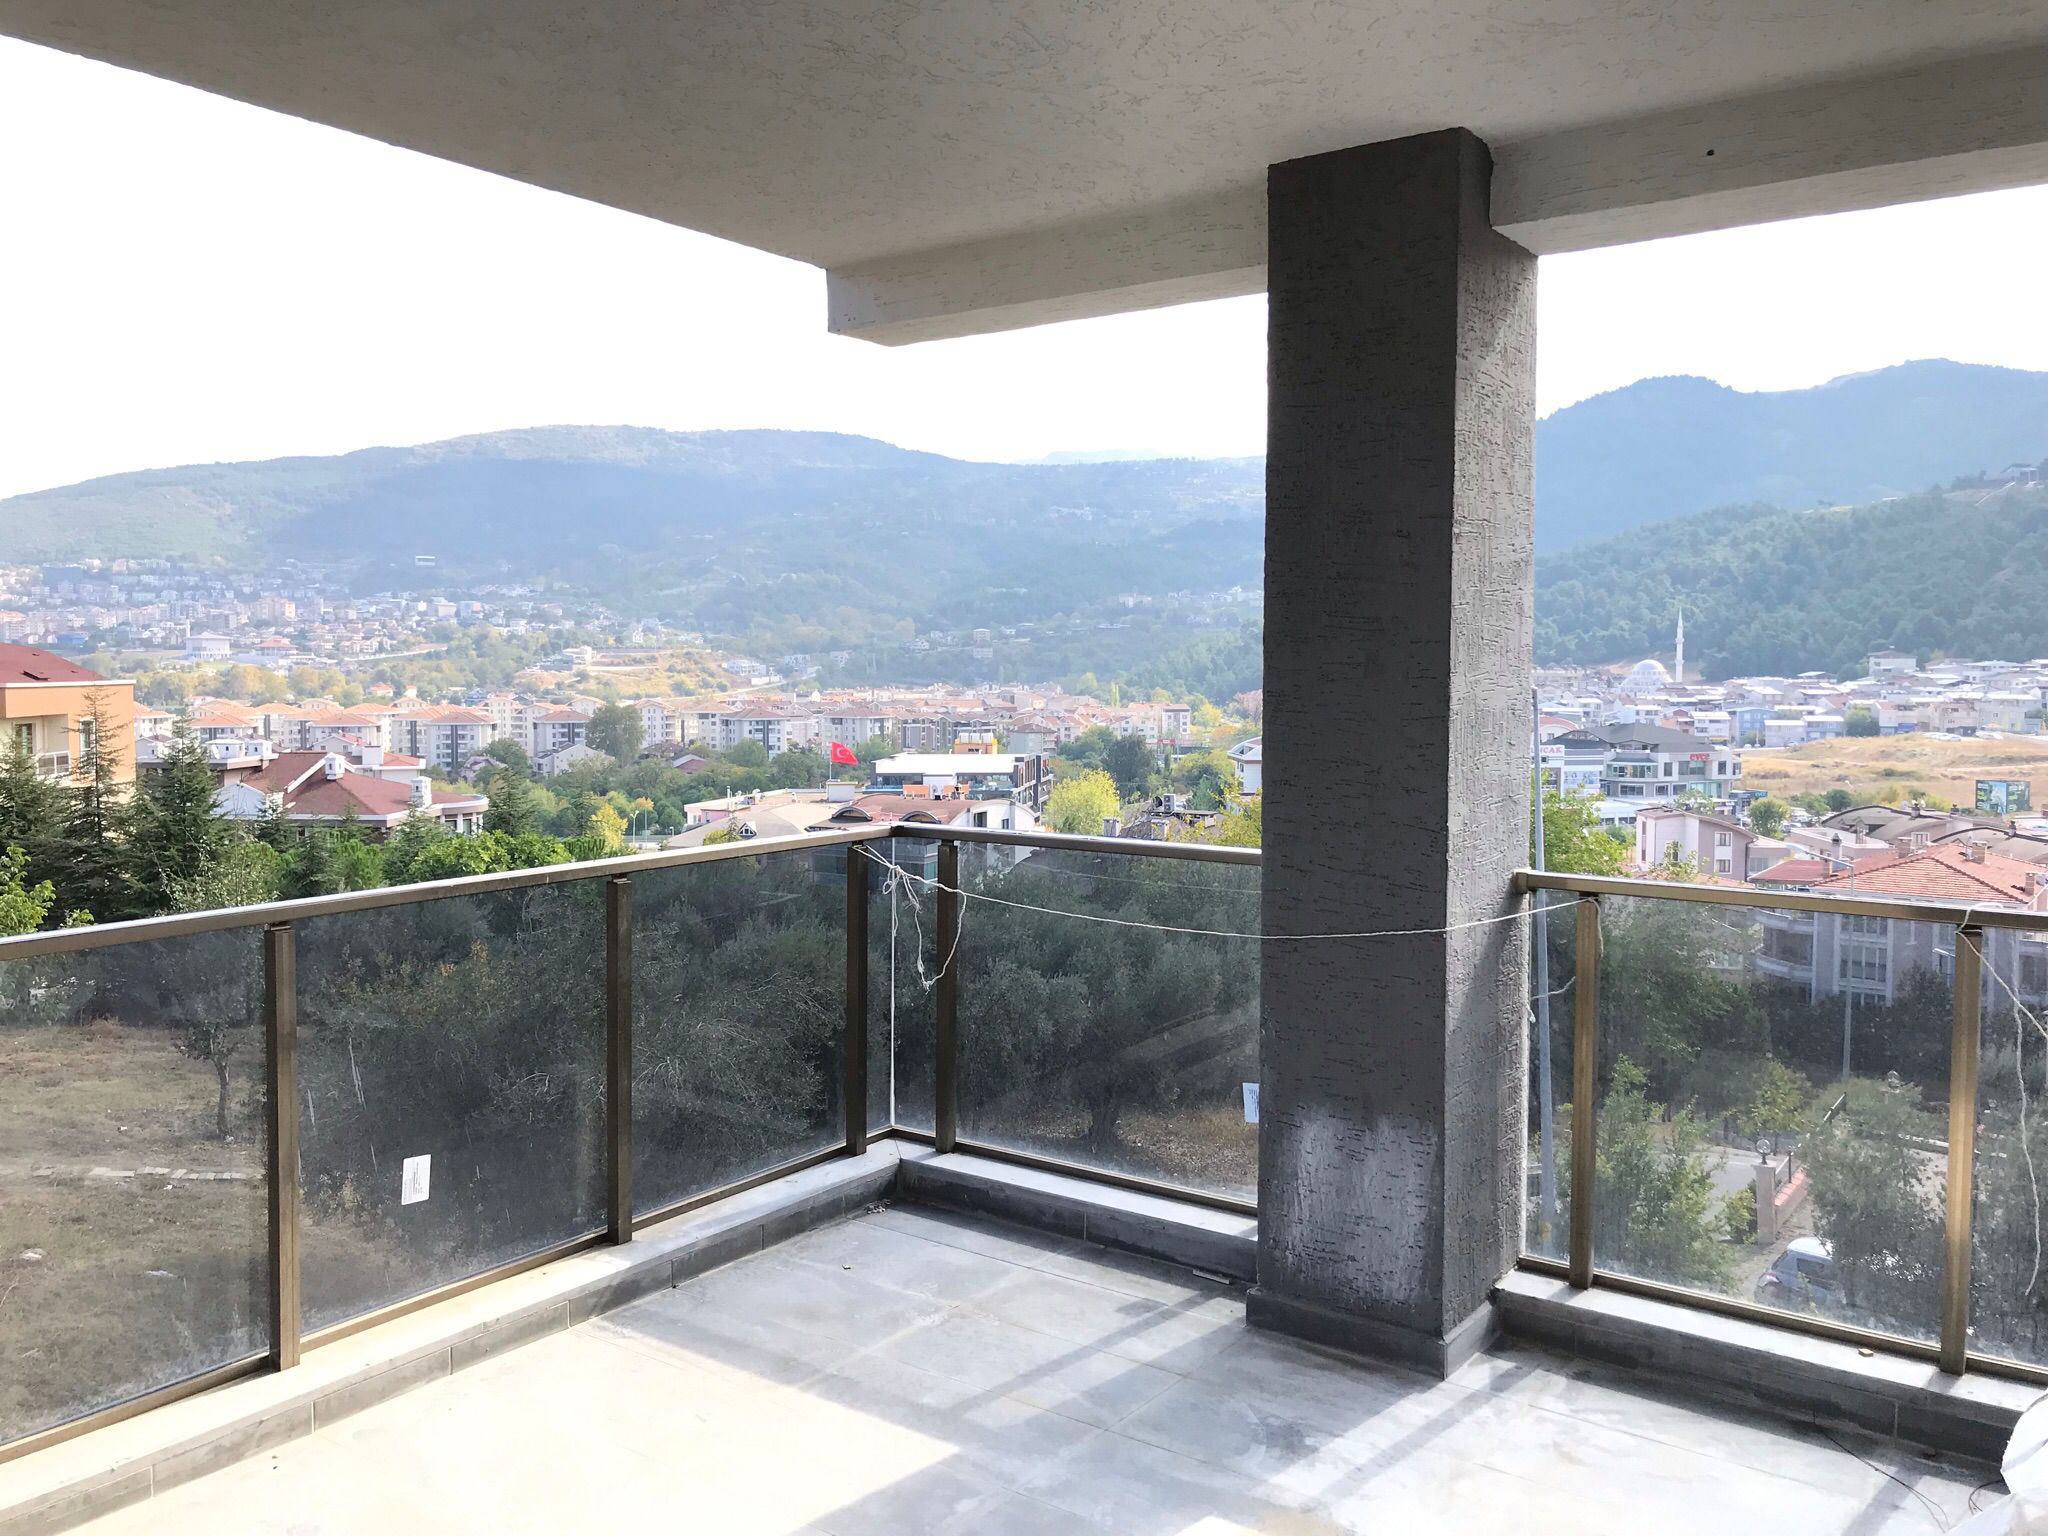 Landscape view 3+1 Flat for sale in Bursa (Second floor)